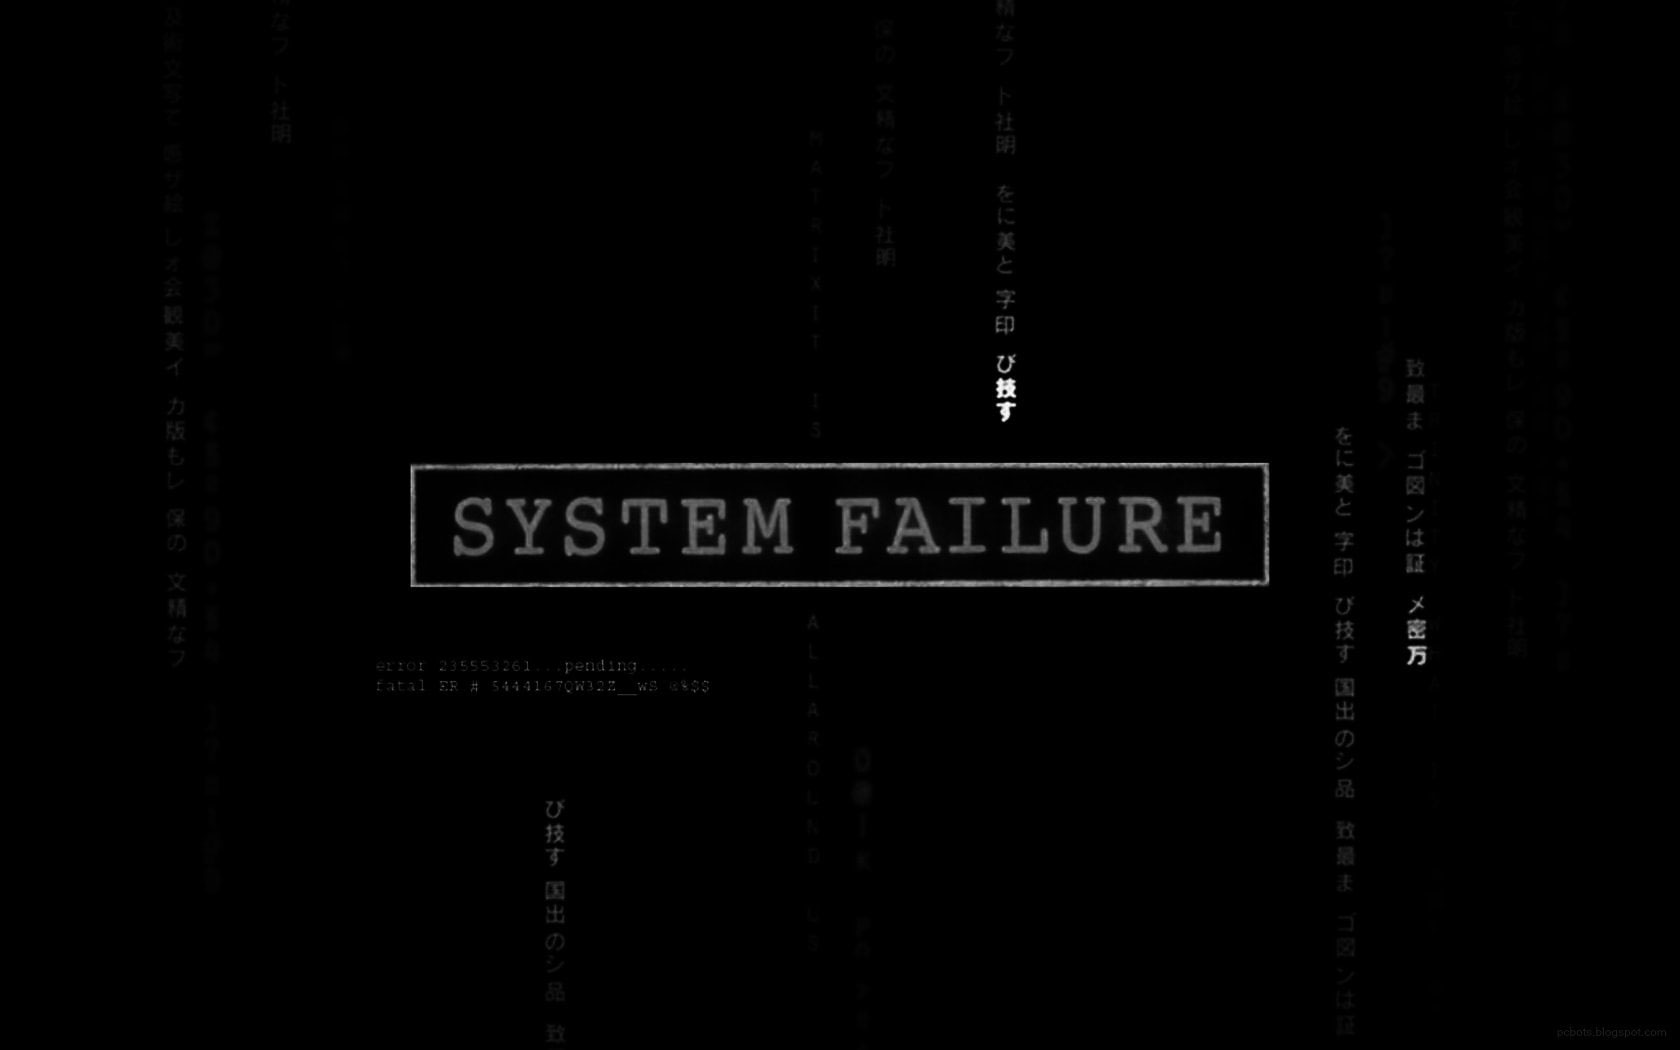 Wallpaper System Failure, Adventure, Binary, Code, Computer, Cyber